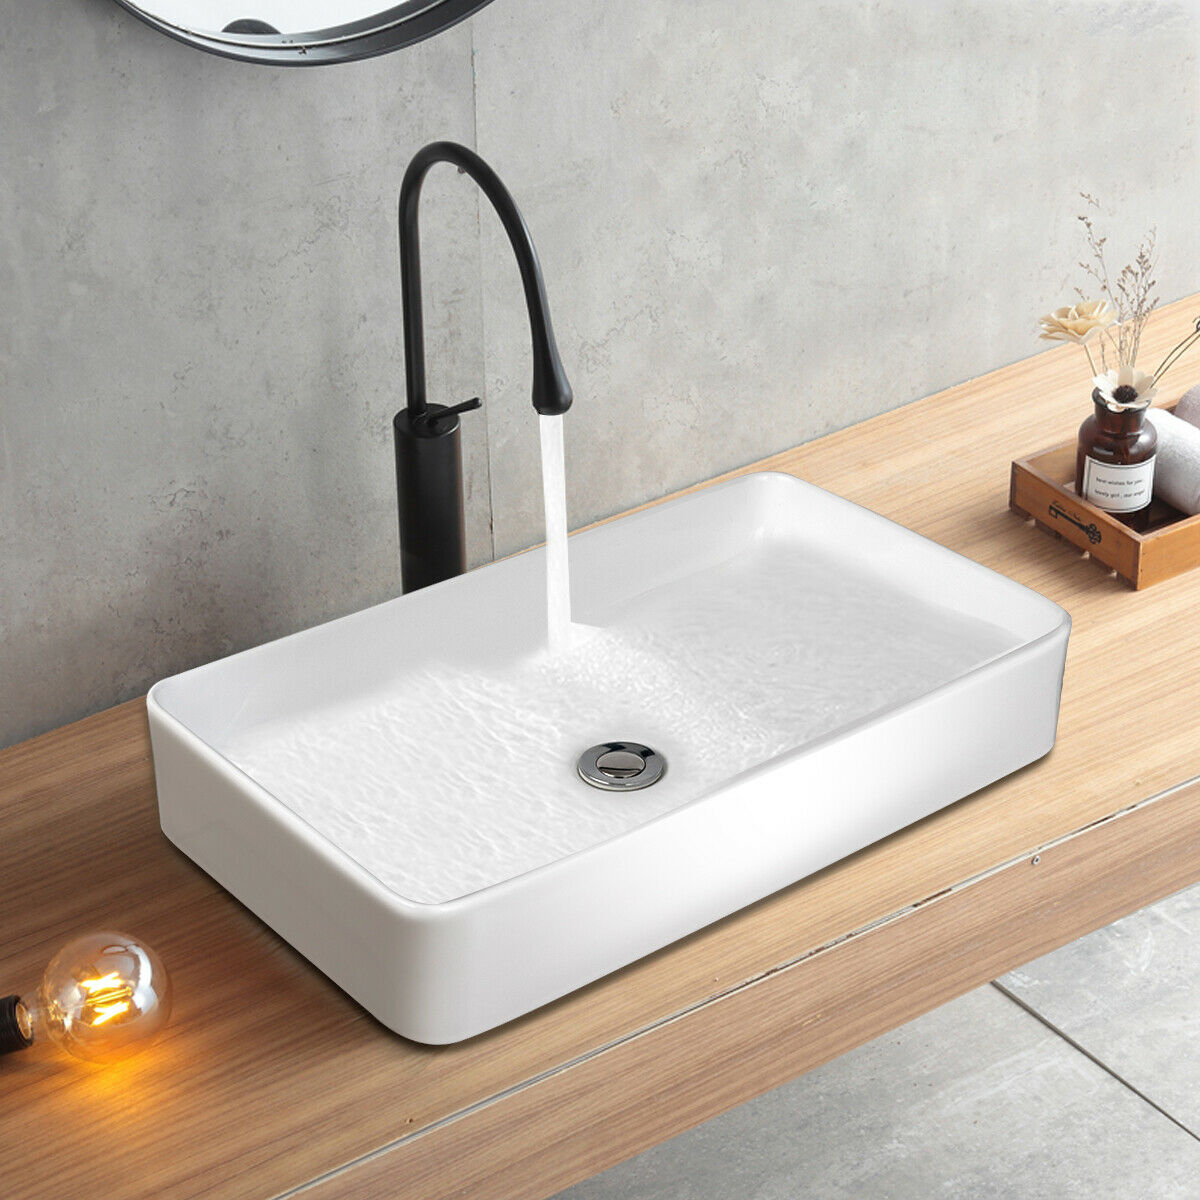 24 X 14 Rectangle Bathroom Ceramic Vessel Sink Vanity Art Basin W/Pop-up Drain